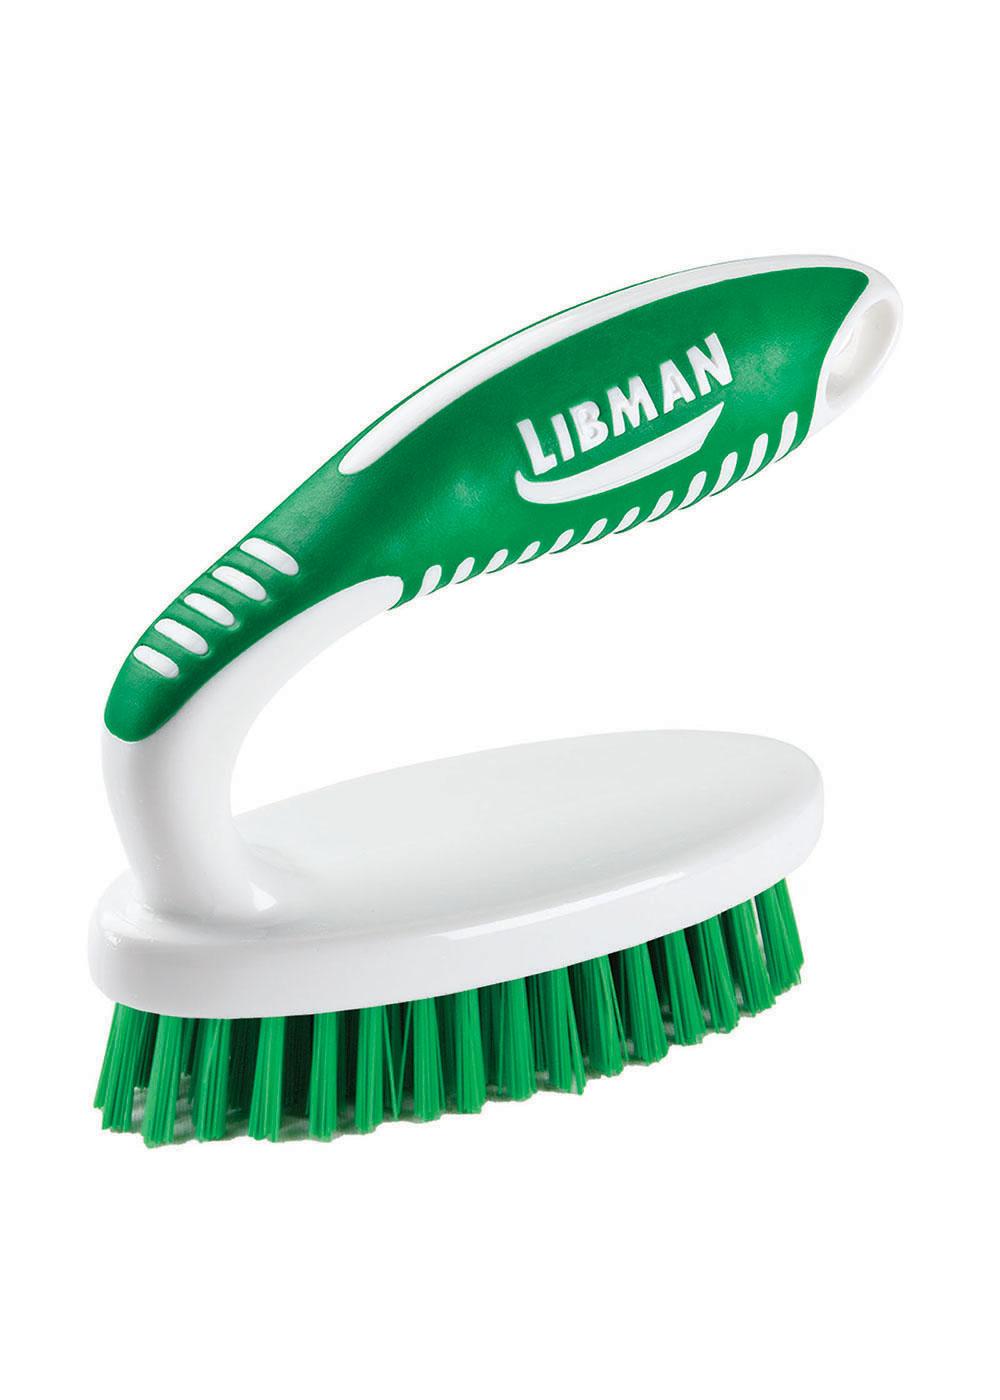 Libman Scrub Brush, Long Handle